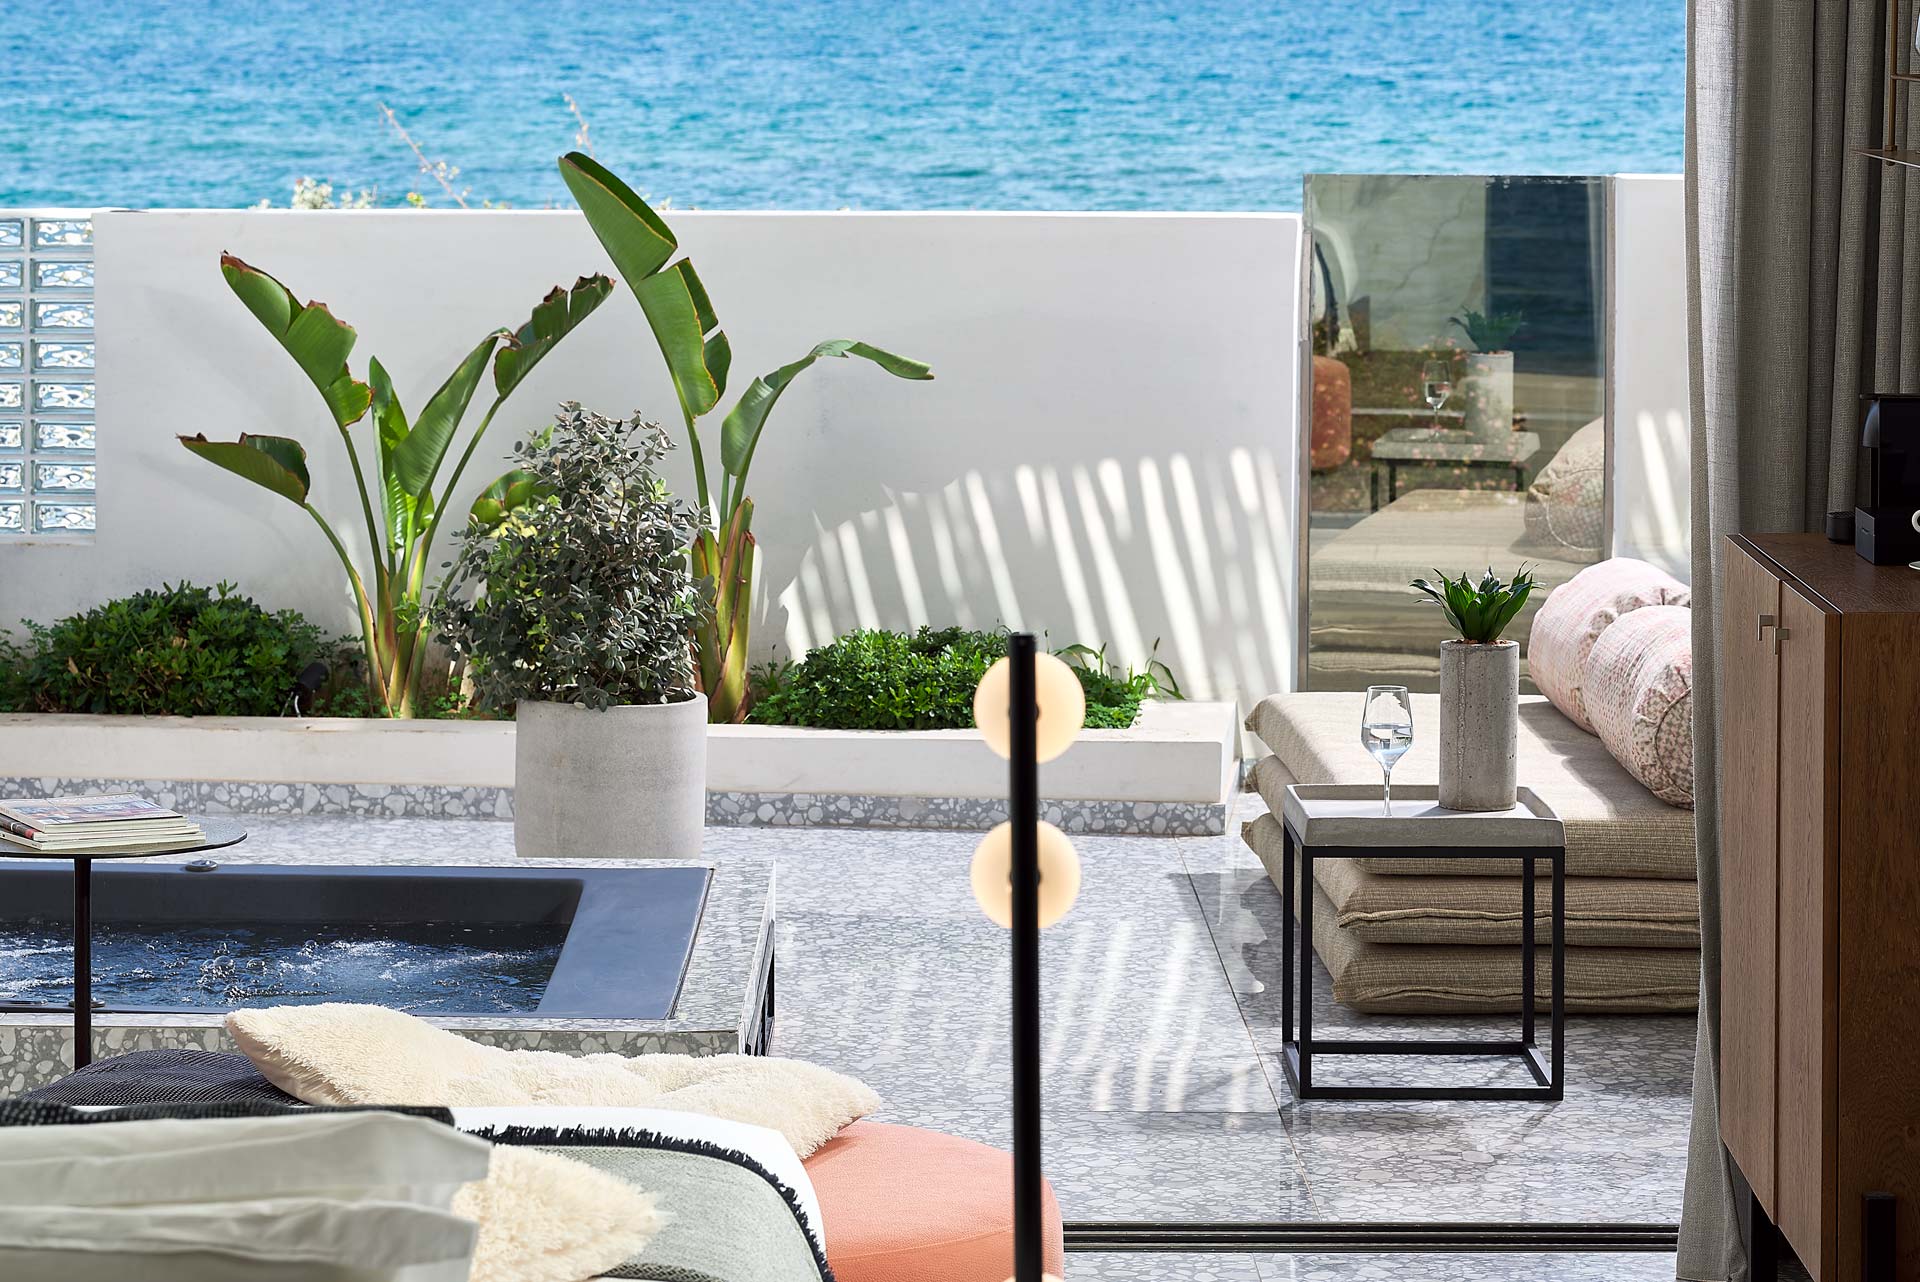 Dyo Suites Luxury Boutique Hotel Rethymno Crete - Palladium Suite